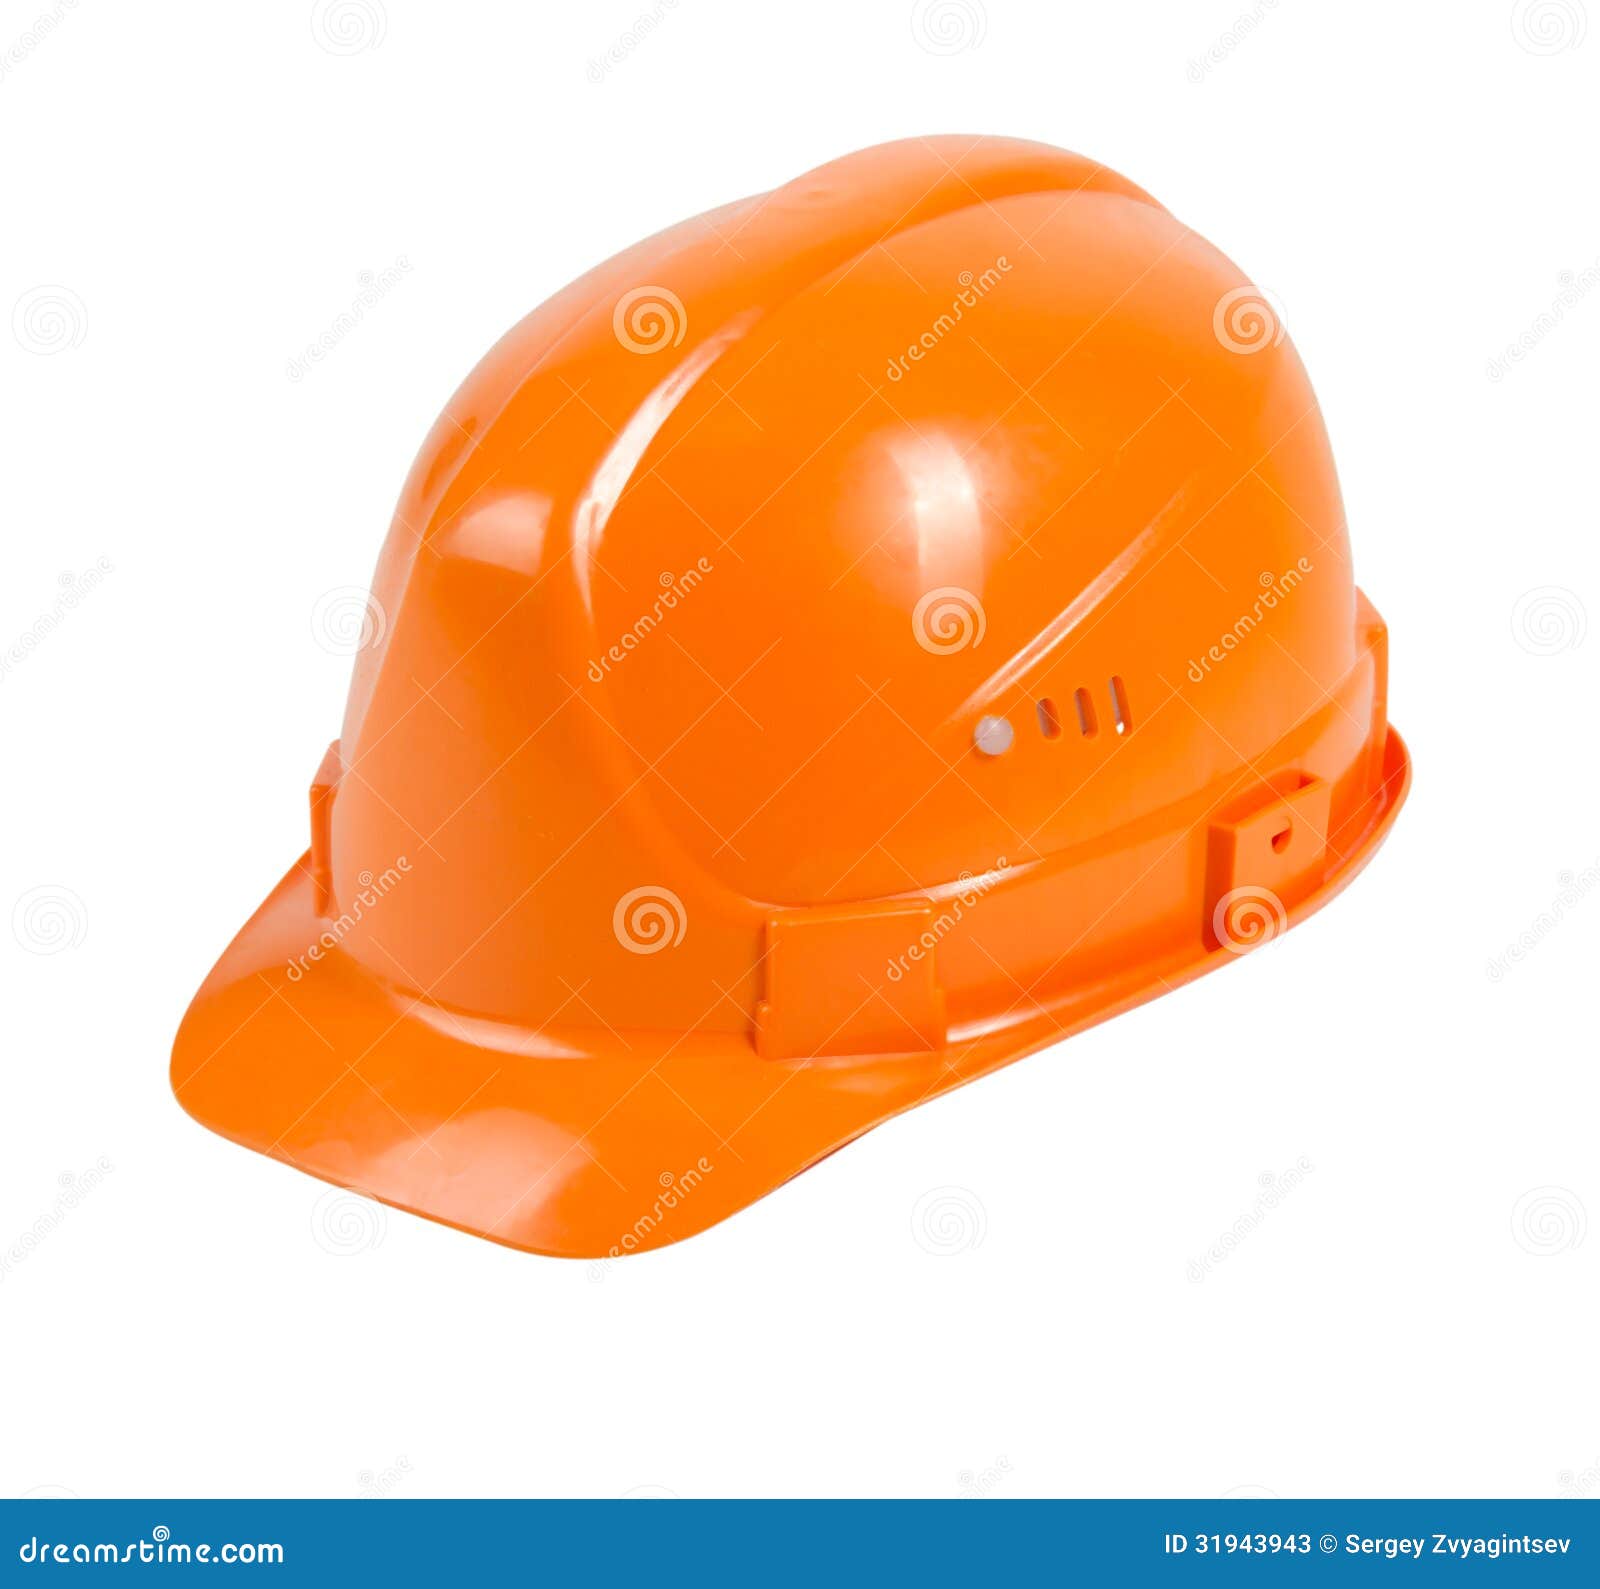 orange hard hat clipart - photo #39